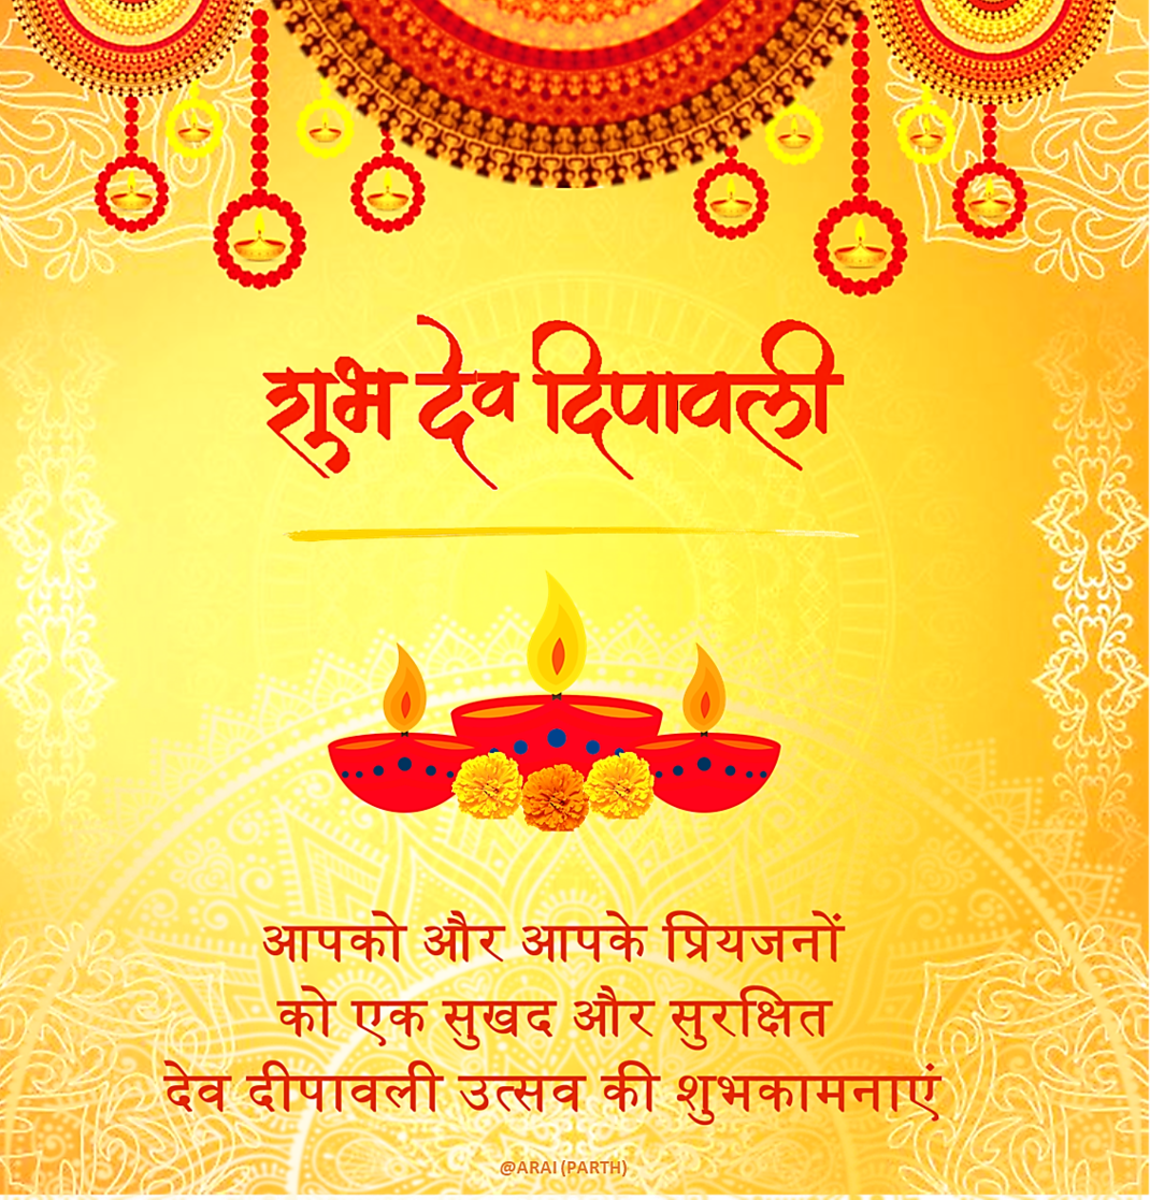 Dev Diwali Wishes in Hindi